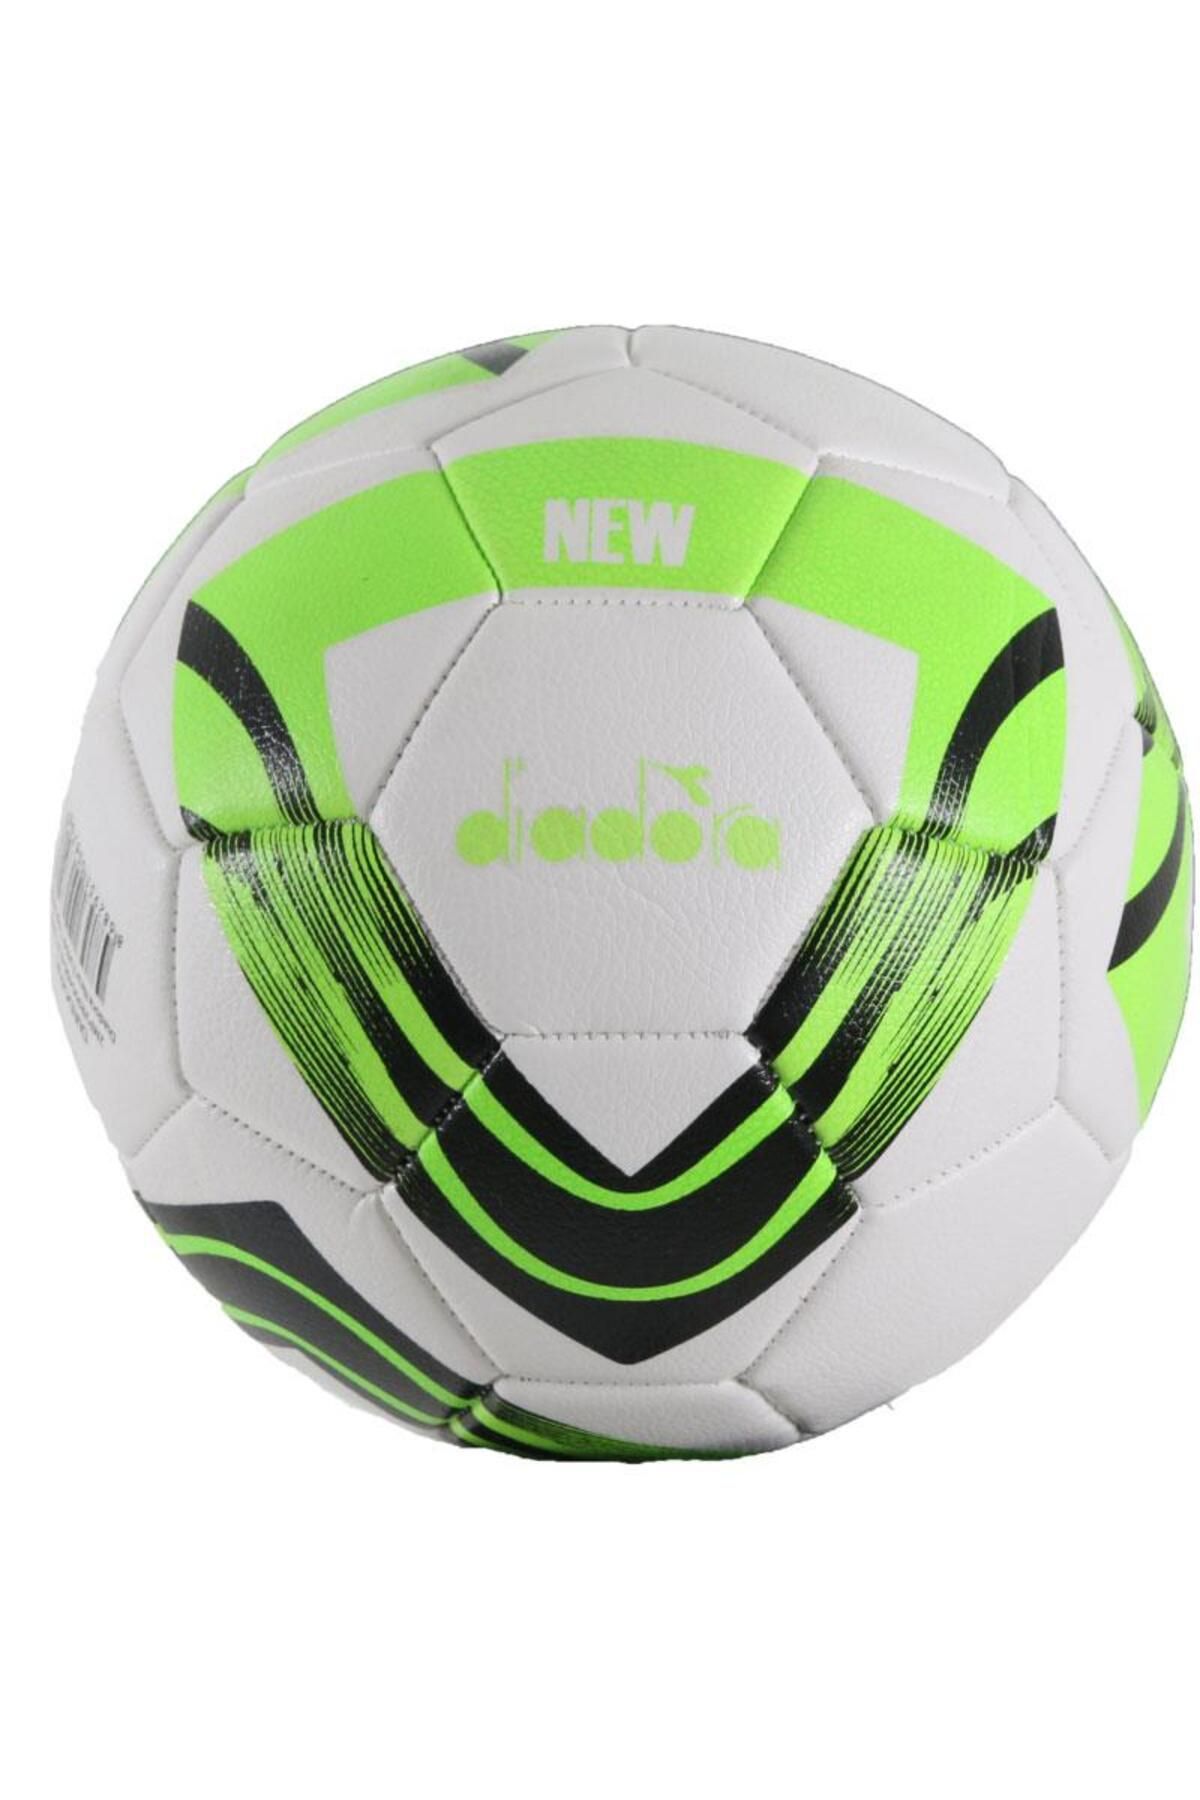 Diadora New Futbol Topu Beyaz - Yeşil - Gri No 4